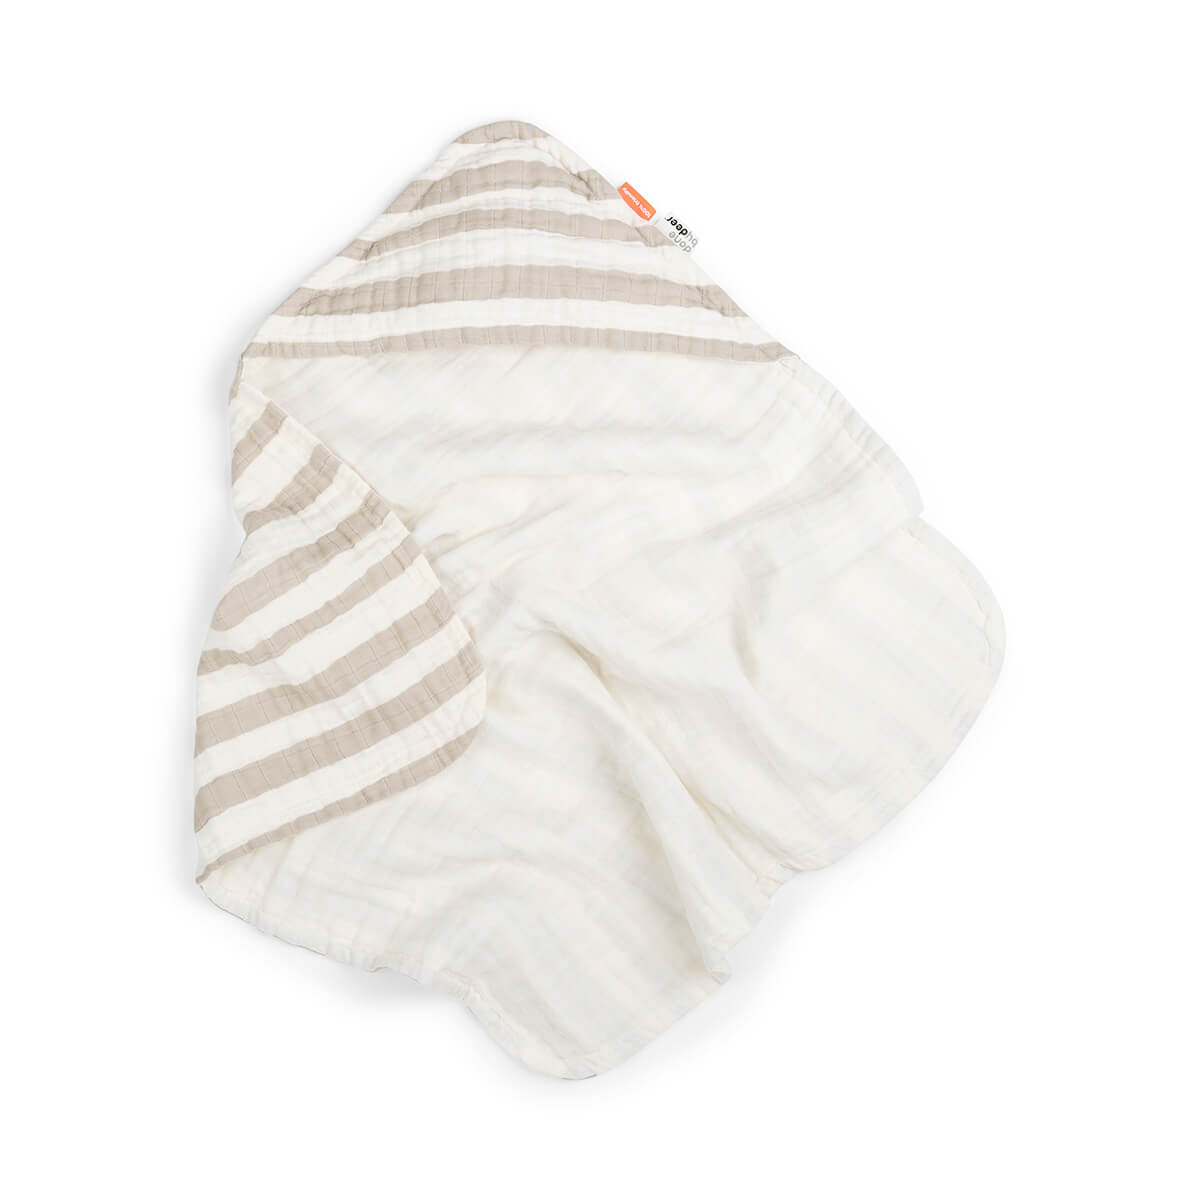 Hooded towel - Stripes - Sand